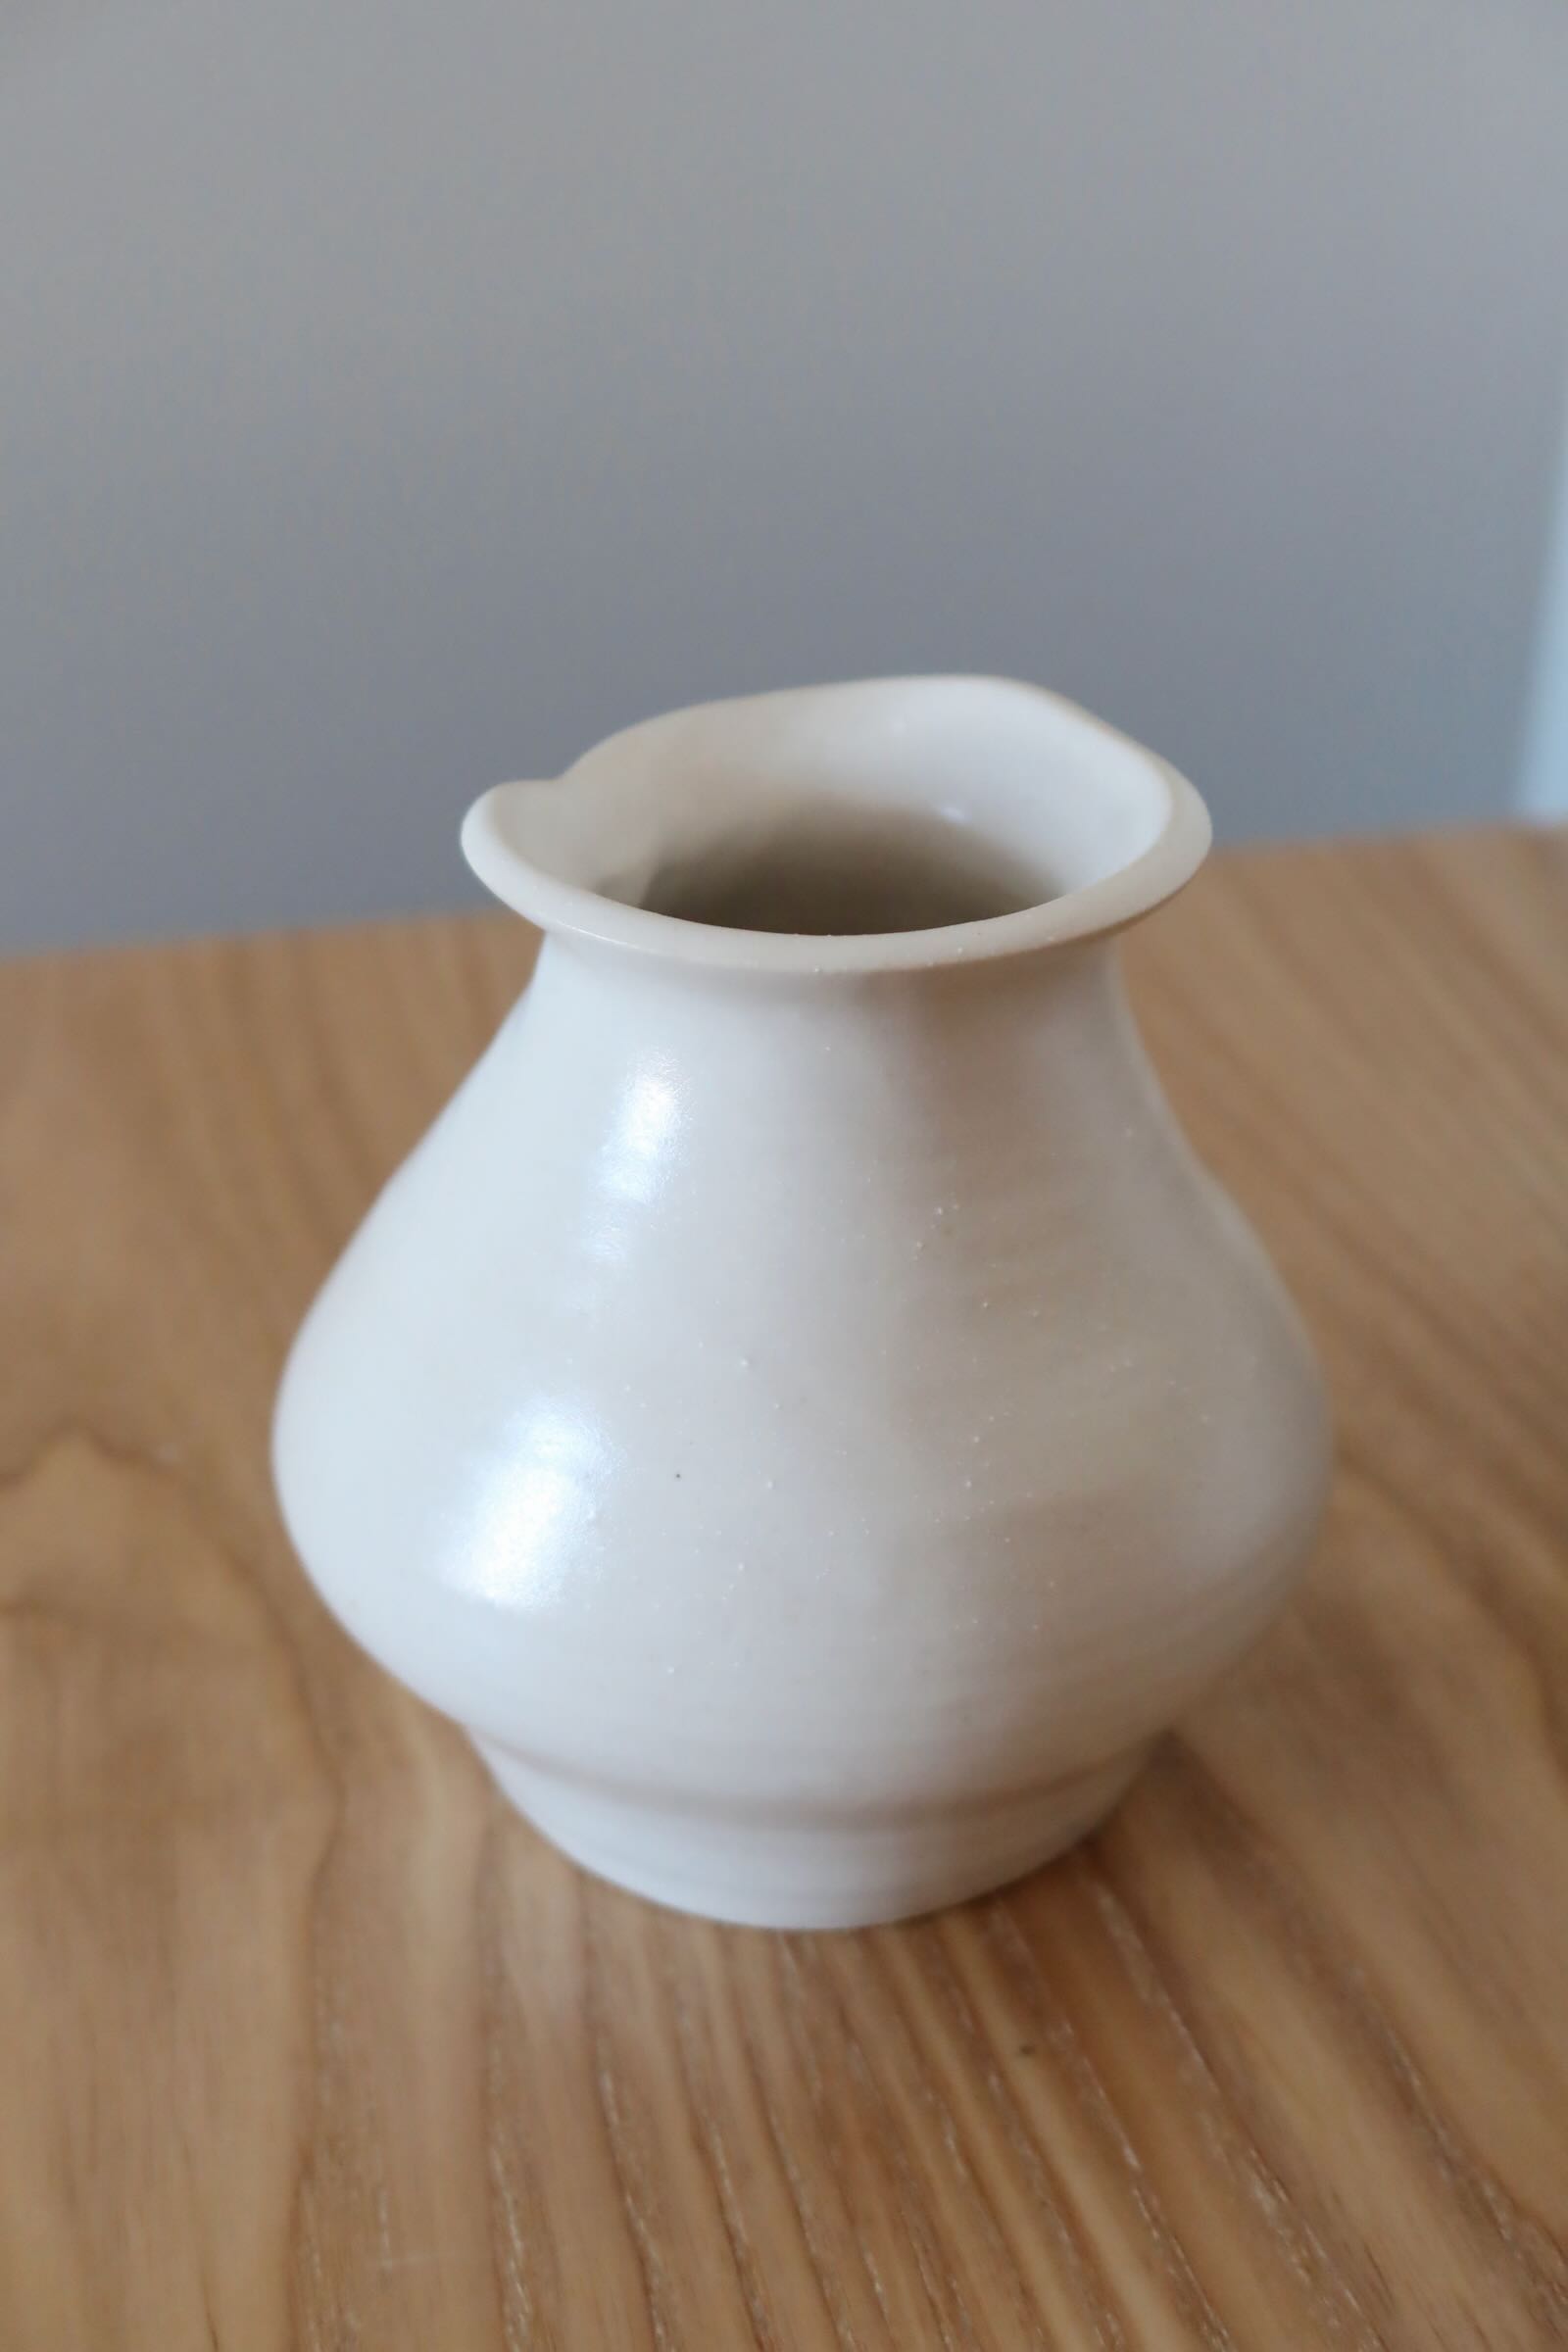 assets/ceramics4.jpeg|Photo of a ceramic vase